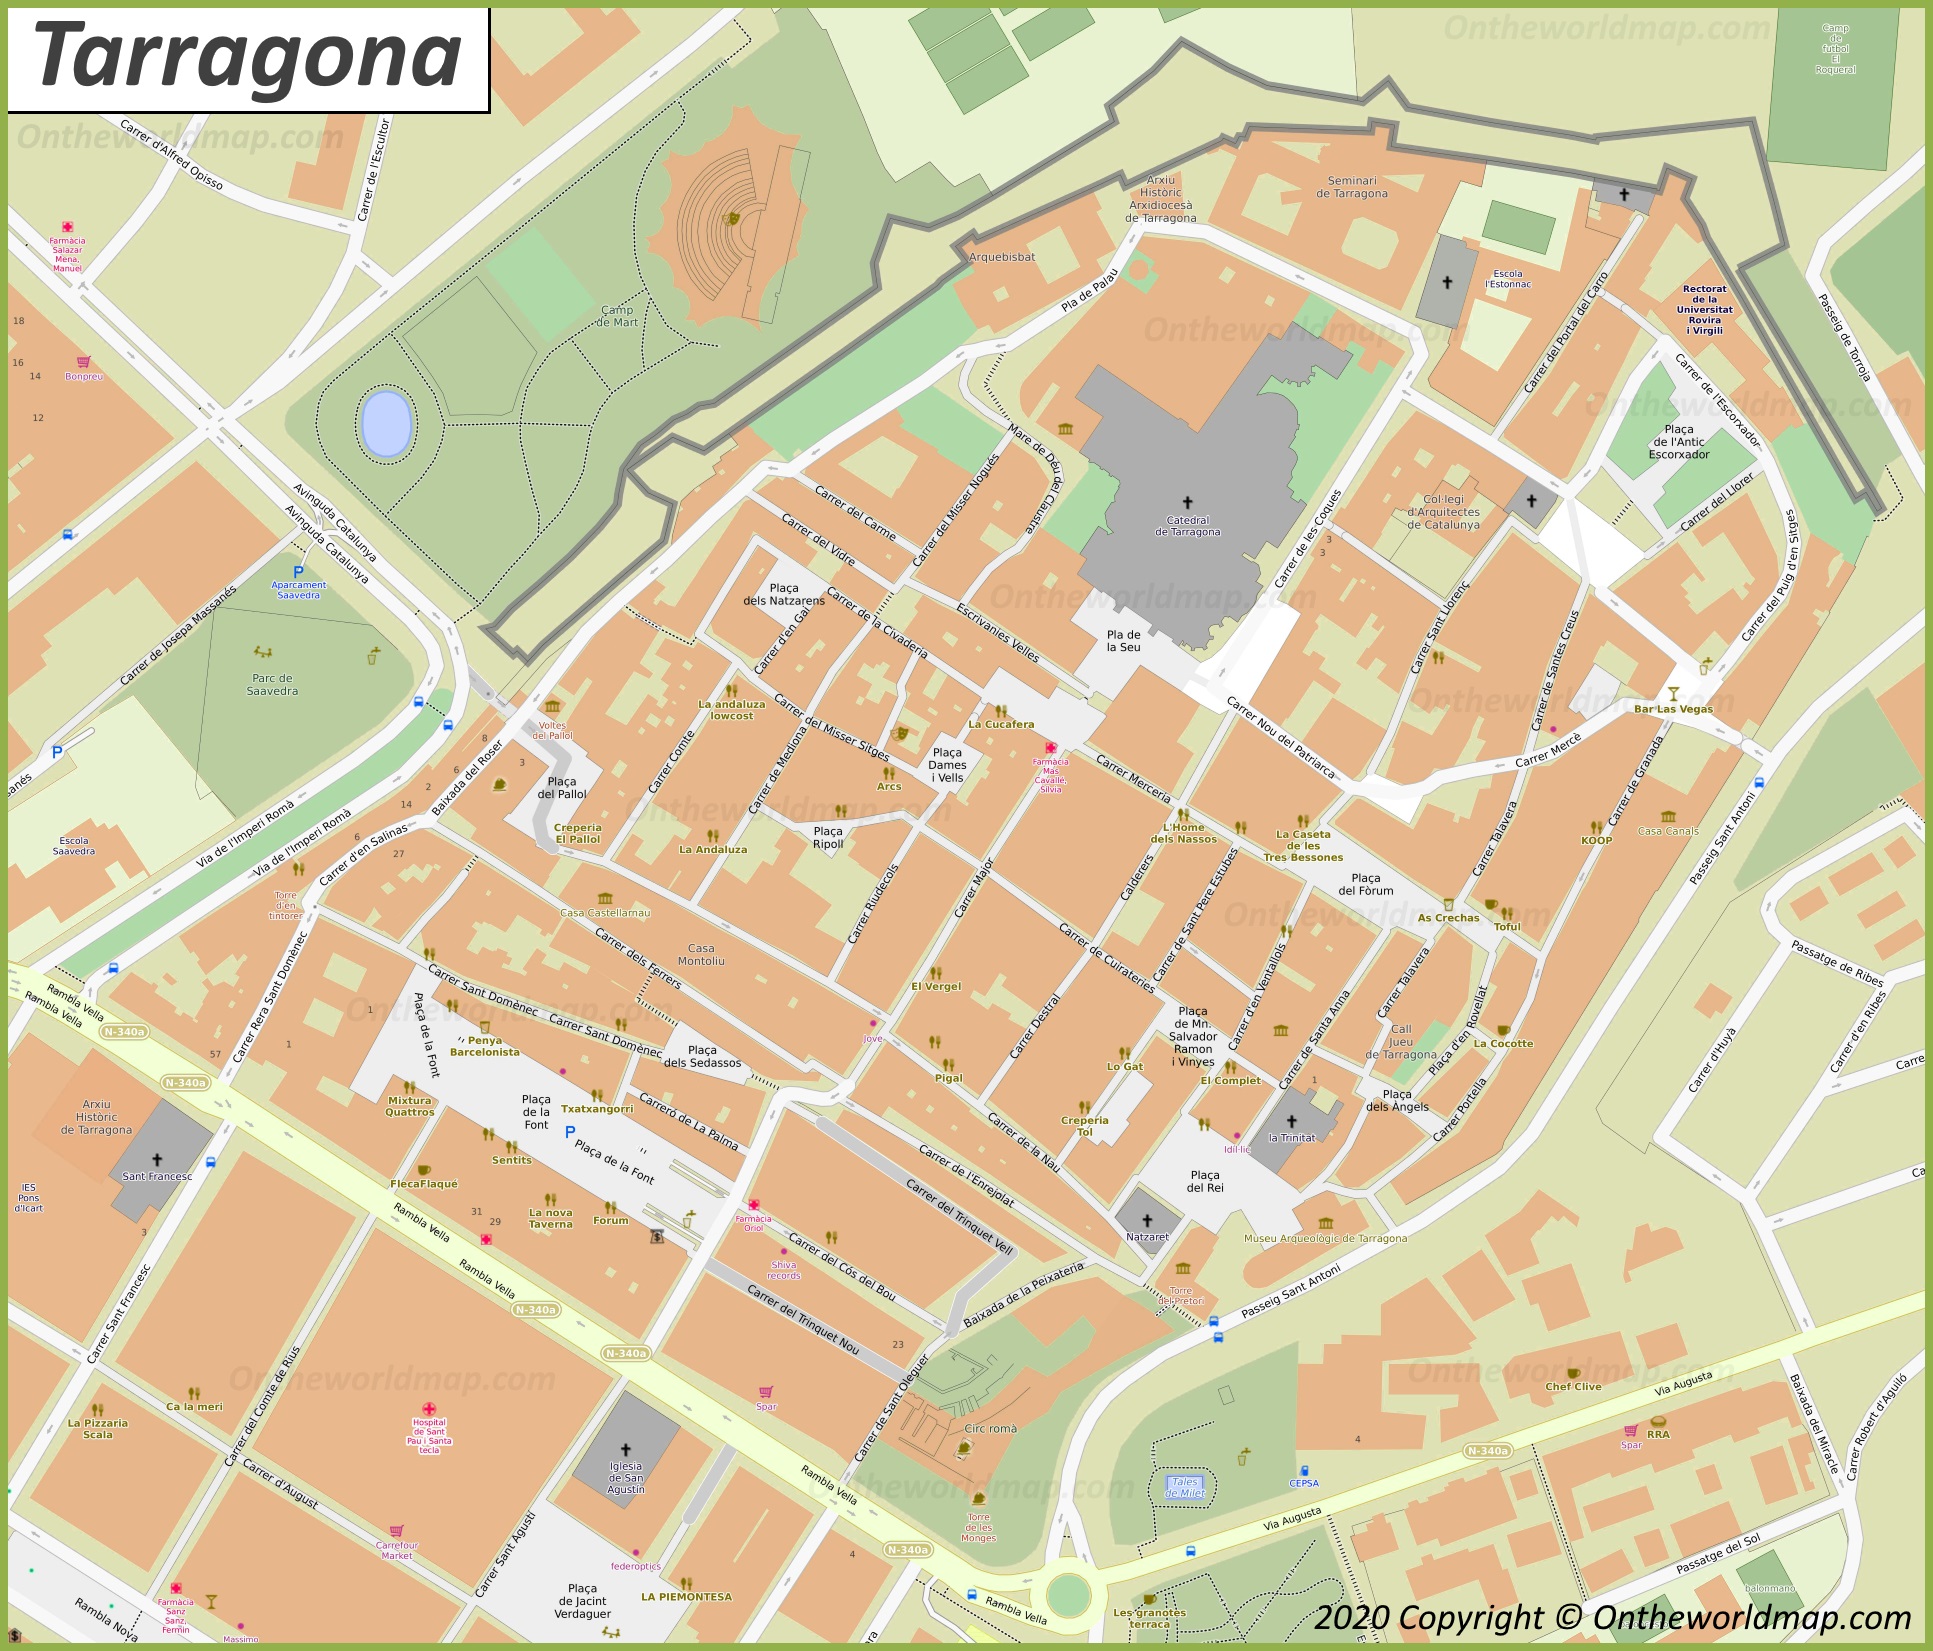 tarragona-old-town-map.jpg